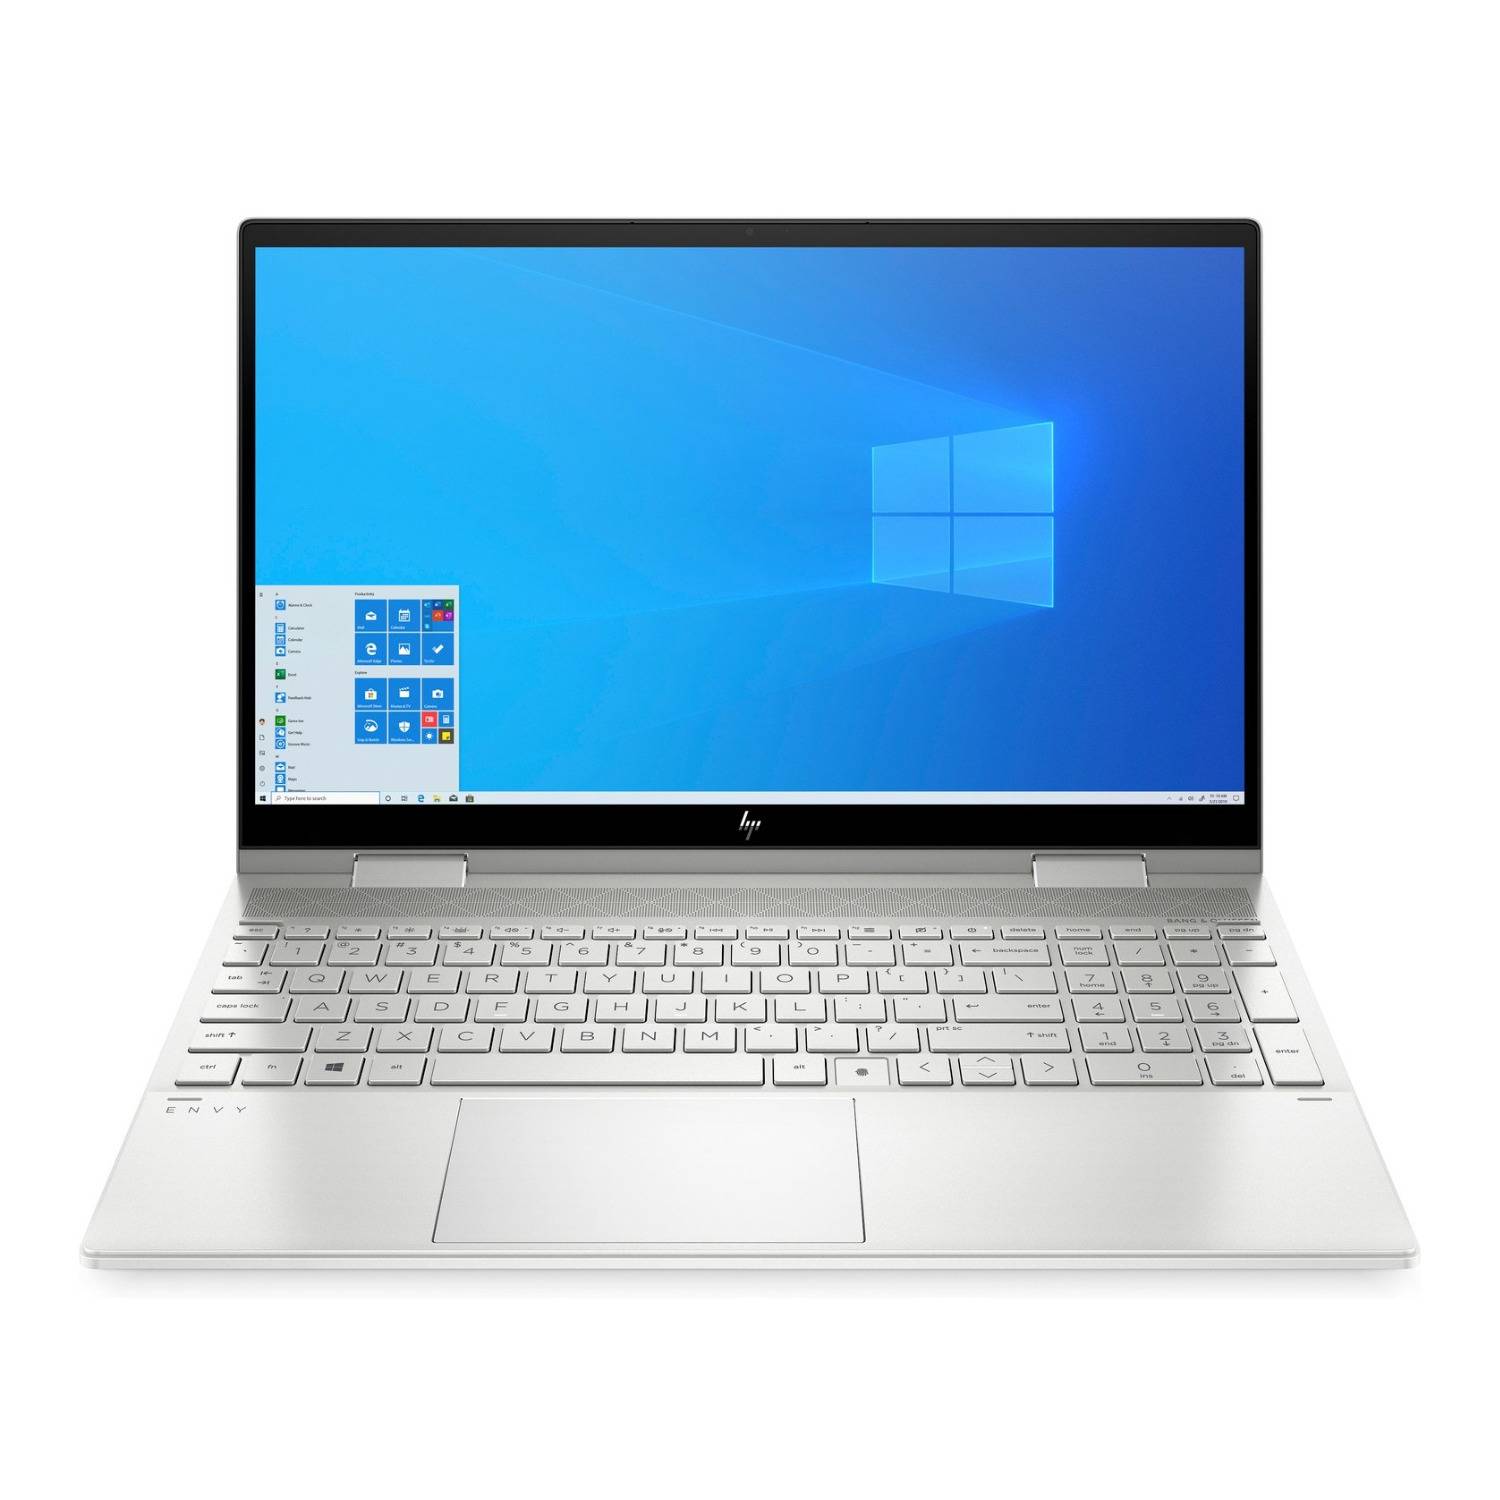 HP Envy x360 15-ED0003 Convertible Laptop 15.6-Inch FHD IPS LED Intel i7-1065G7 16GB 1TB SSD Win 10